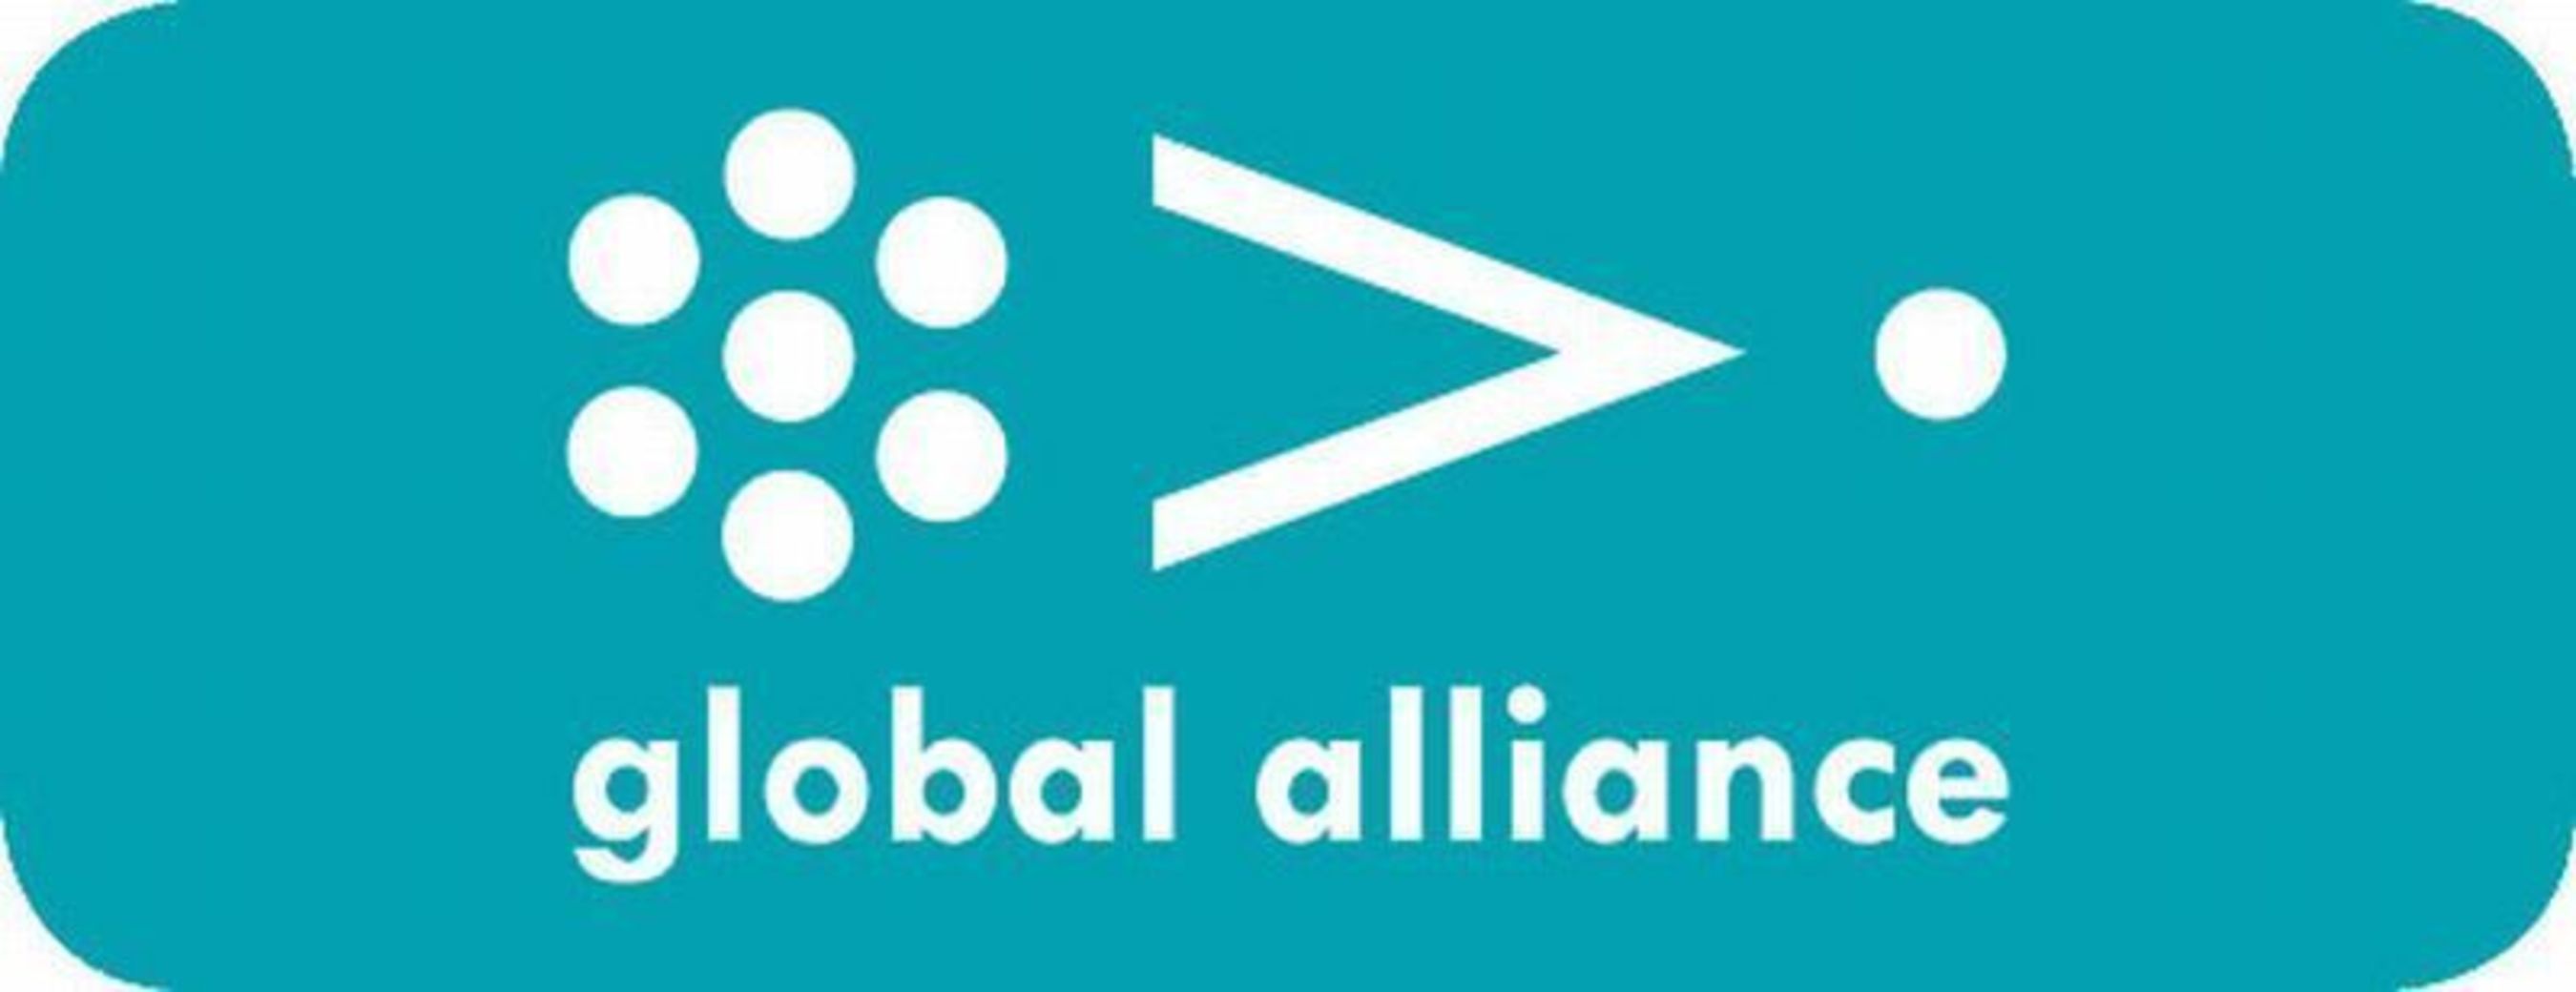 Global Alliance Logo (PRNewsFoto/Global Alliance)